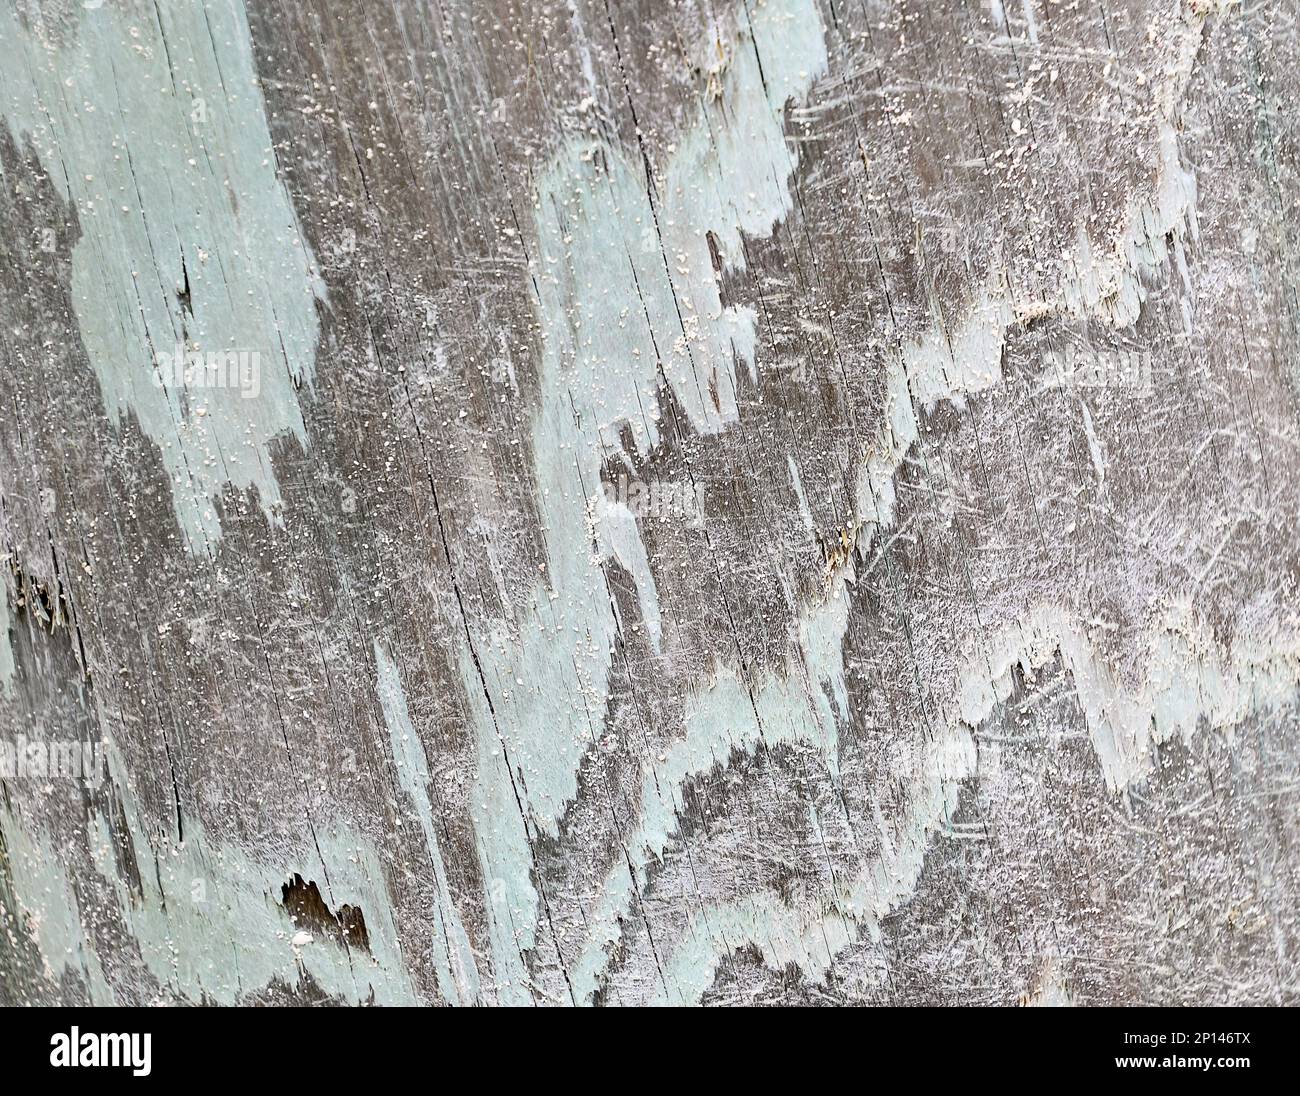 Patrón grungy abstracto con pintura descolorida en madera desgastada Foto de stock